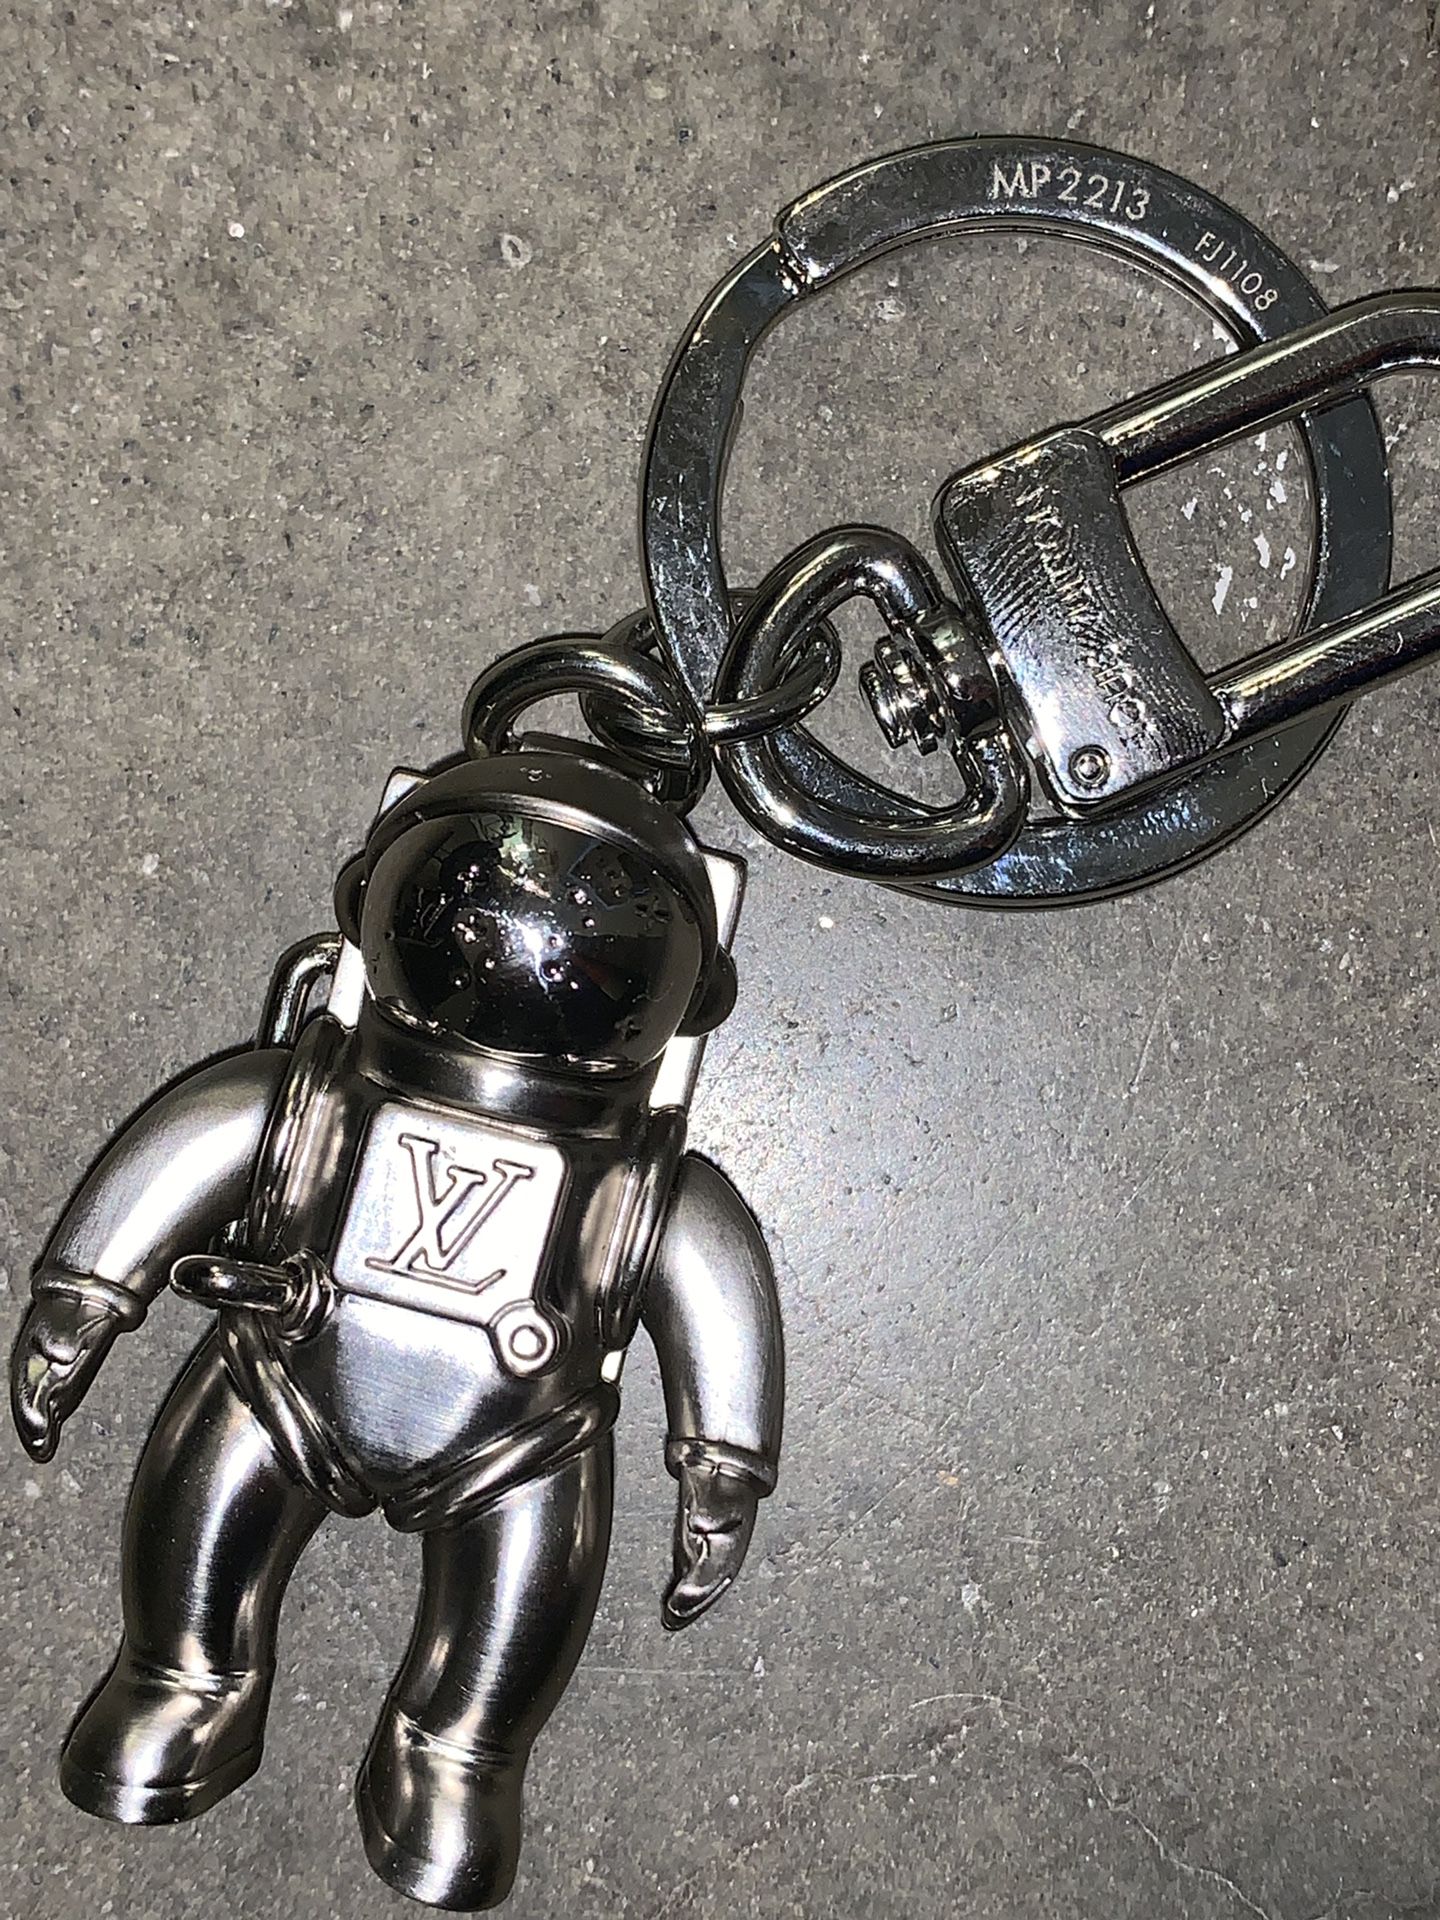 Louis+Vuitton+Astronaut+Spaceman+Keychain+Key+Chain+Bag+Charm+MP2213+Silver  for sale online